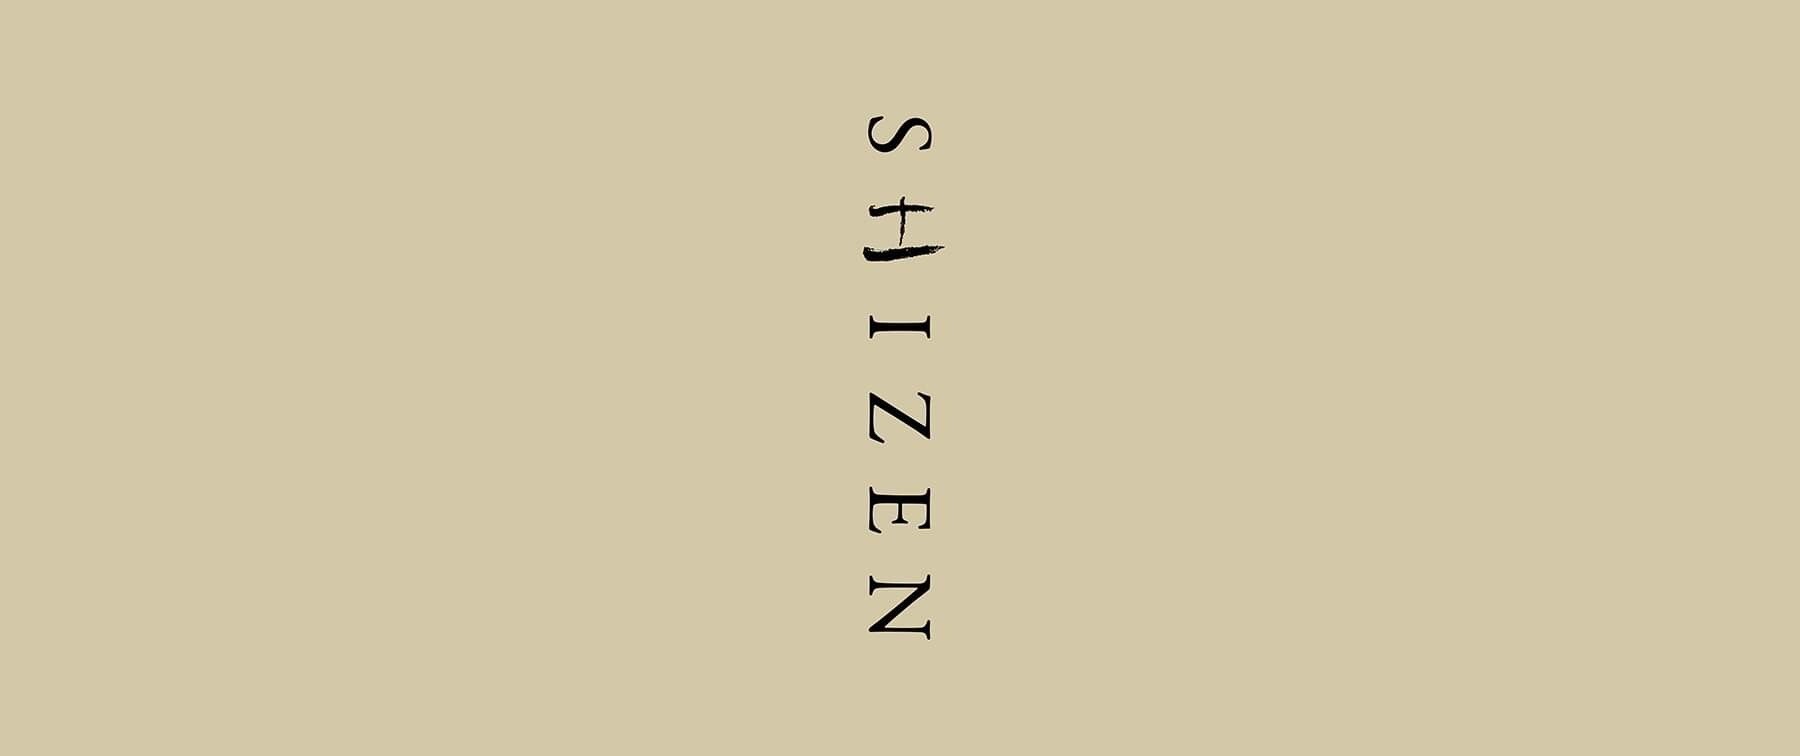 SHIZEN's image